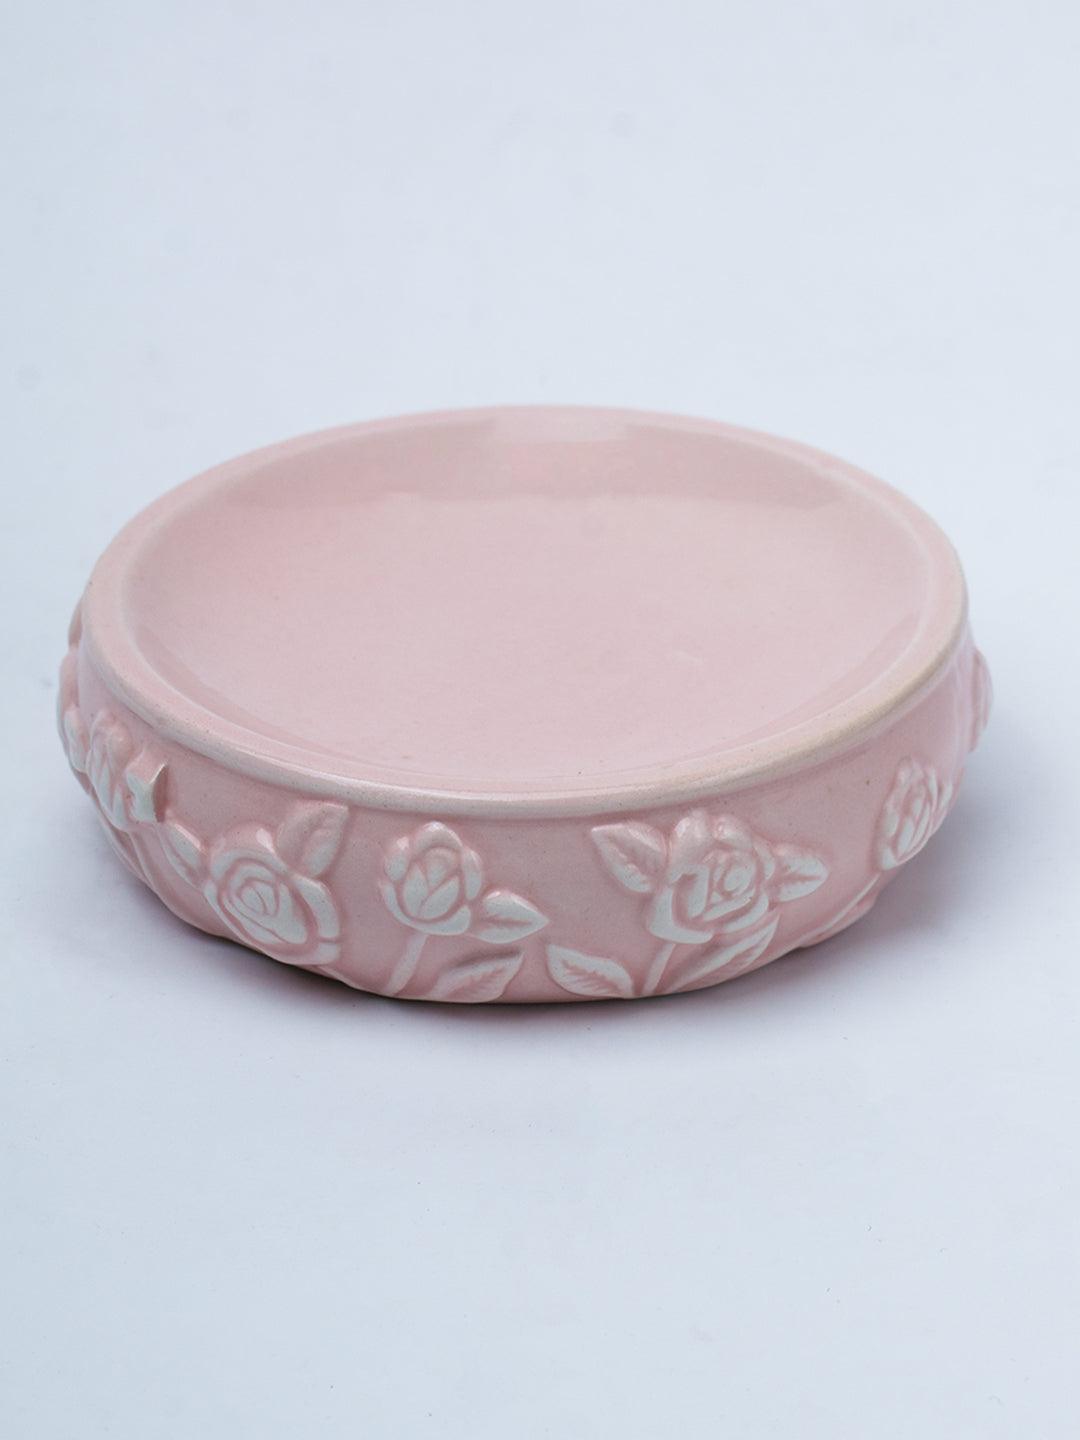 Pink Ceramic Bathroom Set Of 4 - Floral Design, Bath Accessories - 6